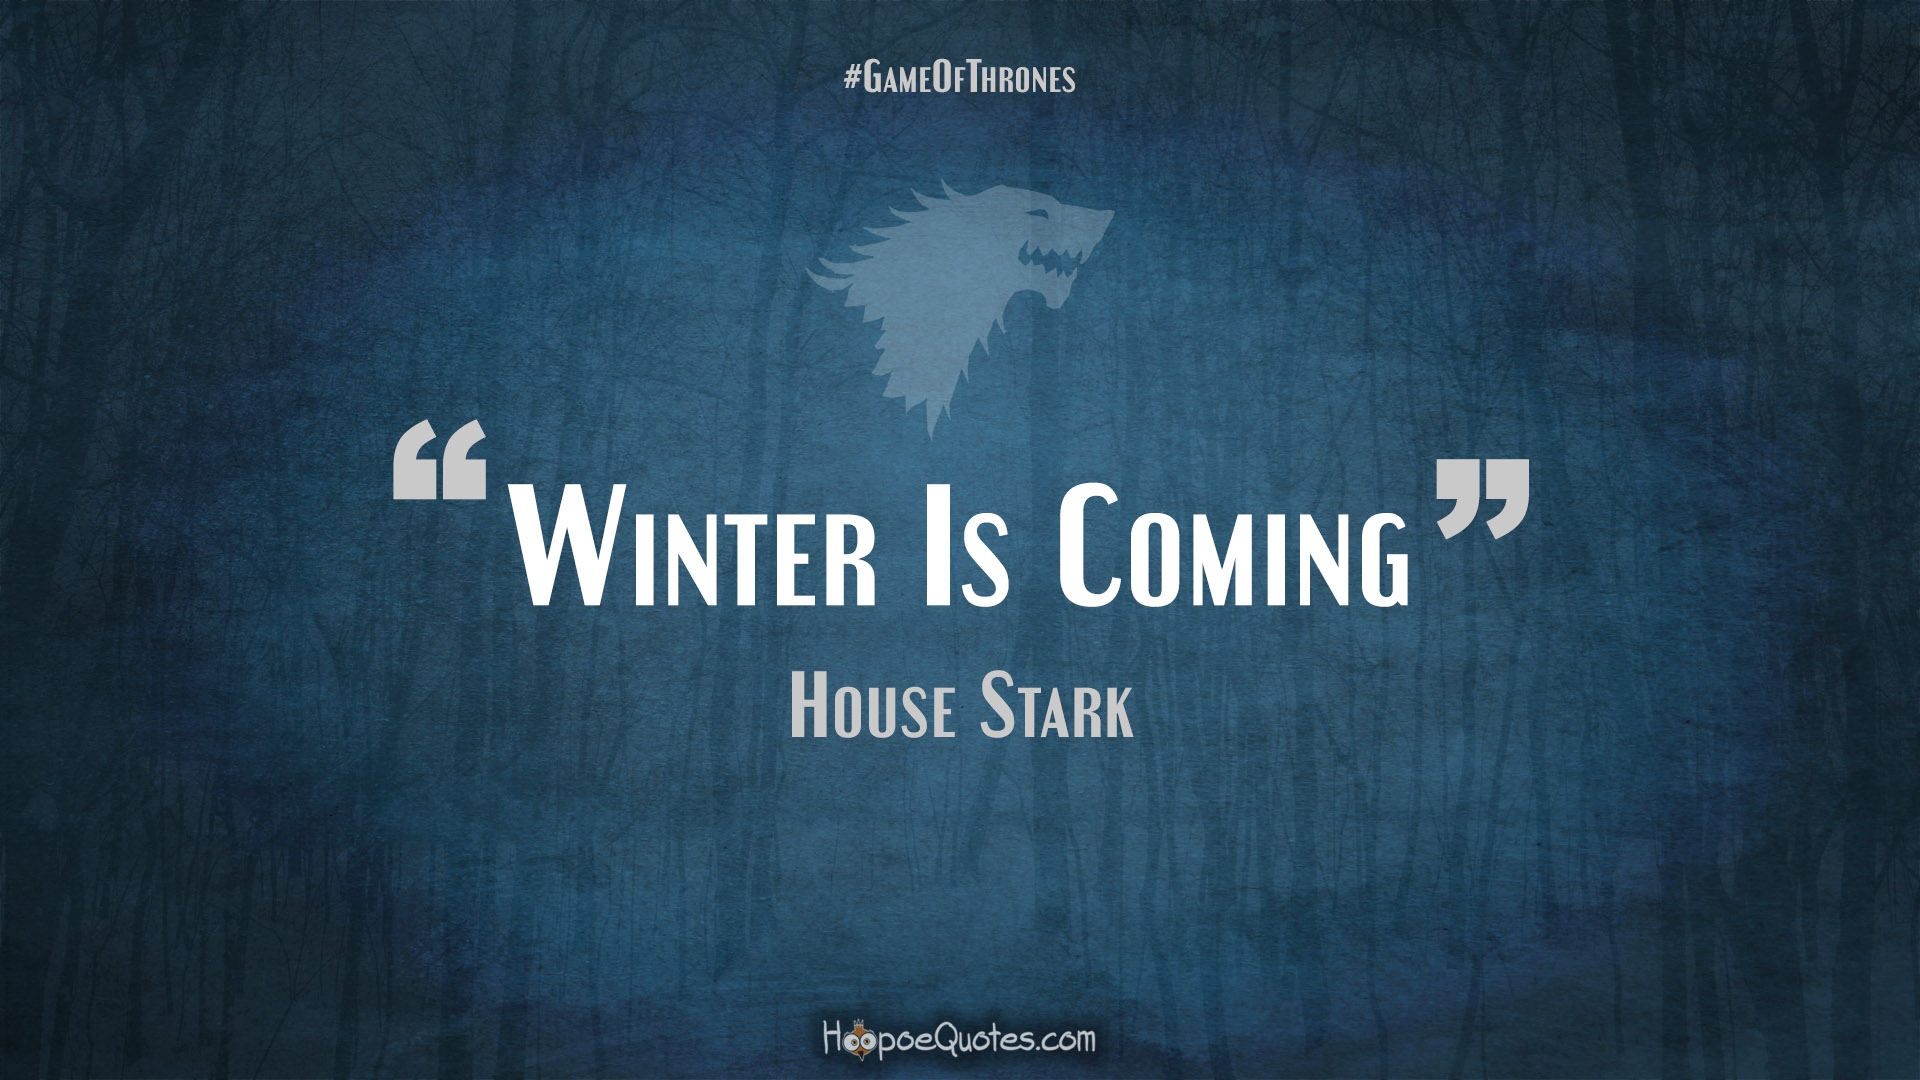 Ned Stark, Bran Stark, Sansa Stark, Hodor, Jon Snow, A Song of Ice and Fire, House Stark, Benjen stark, Winter Is Coming, Quote, Game of Thrones Wallpaper